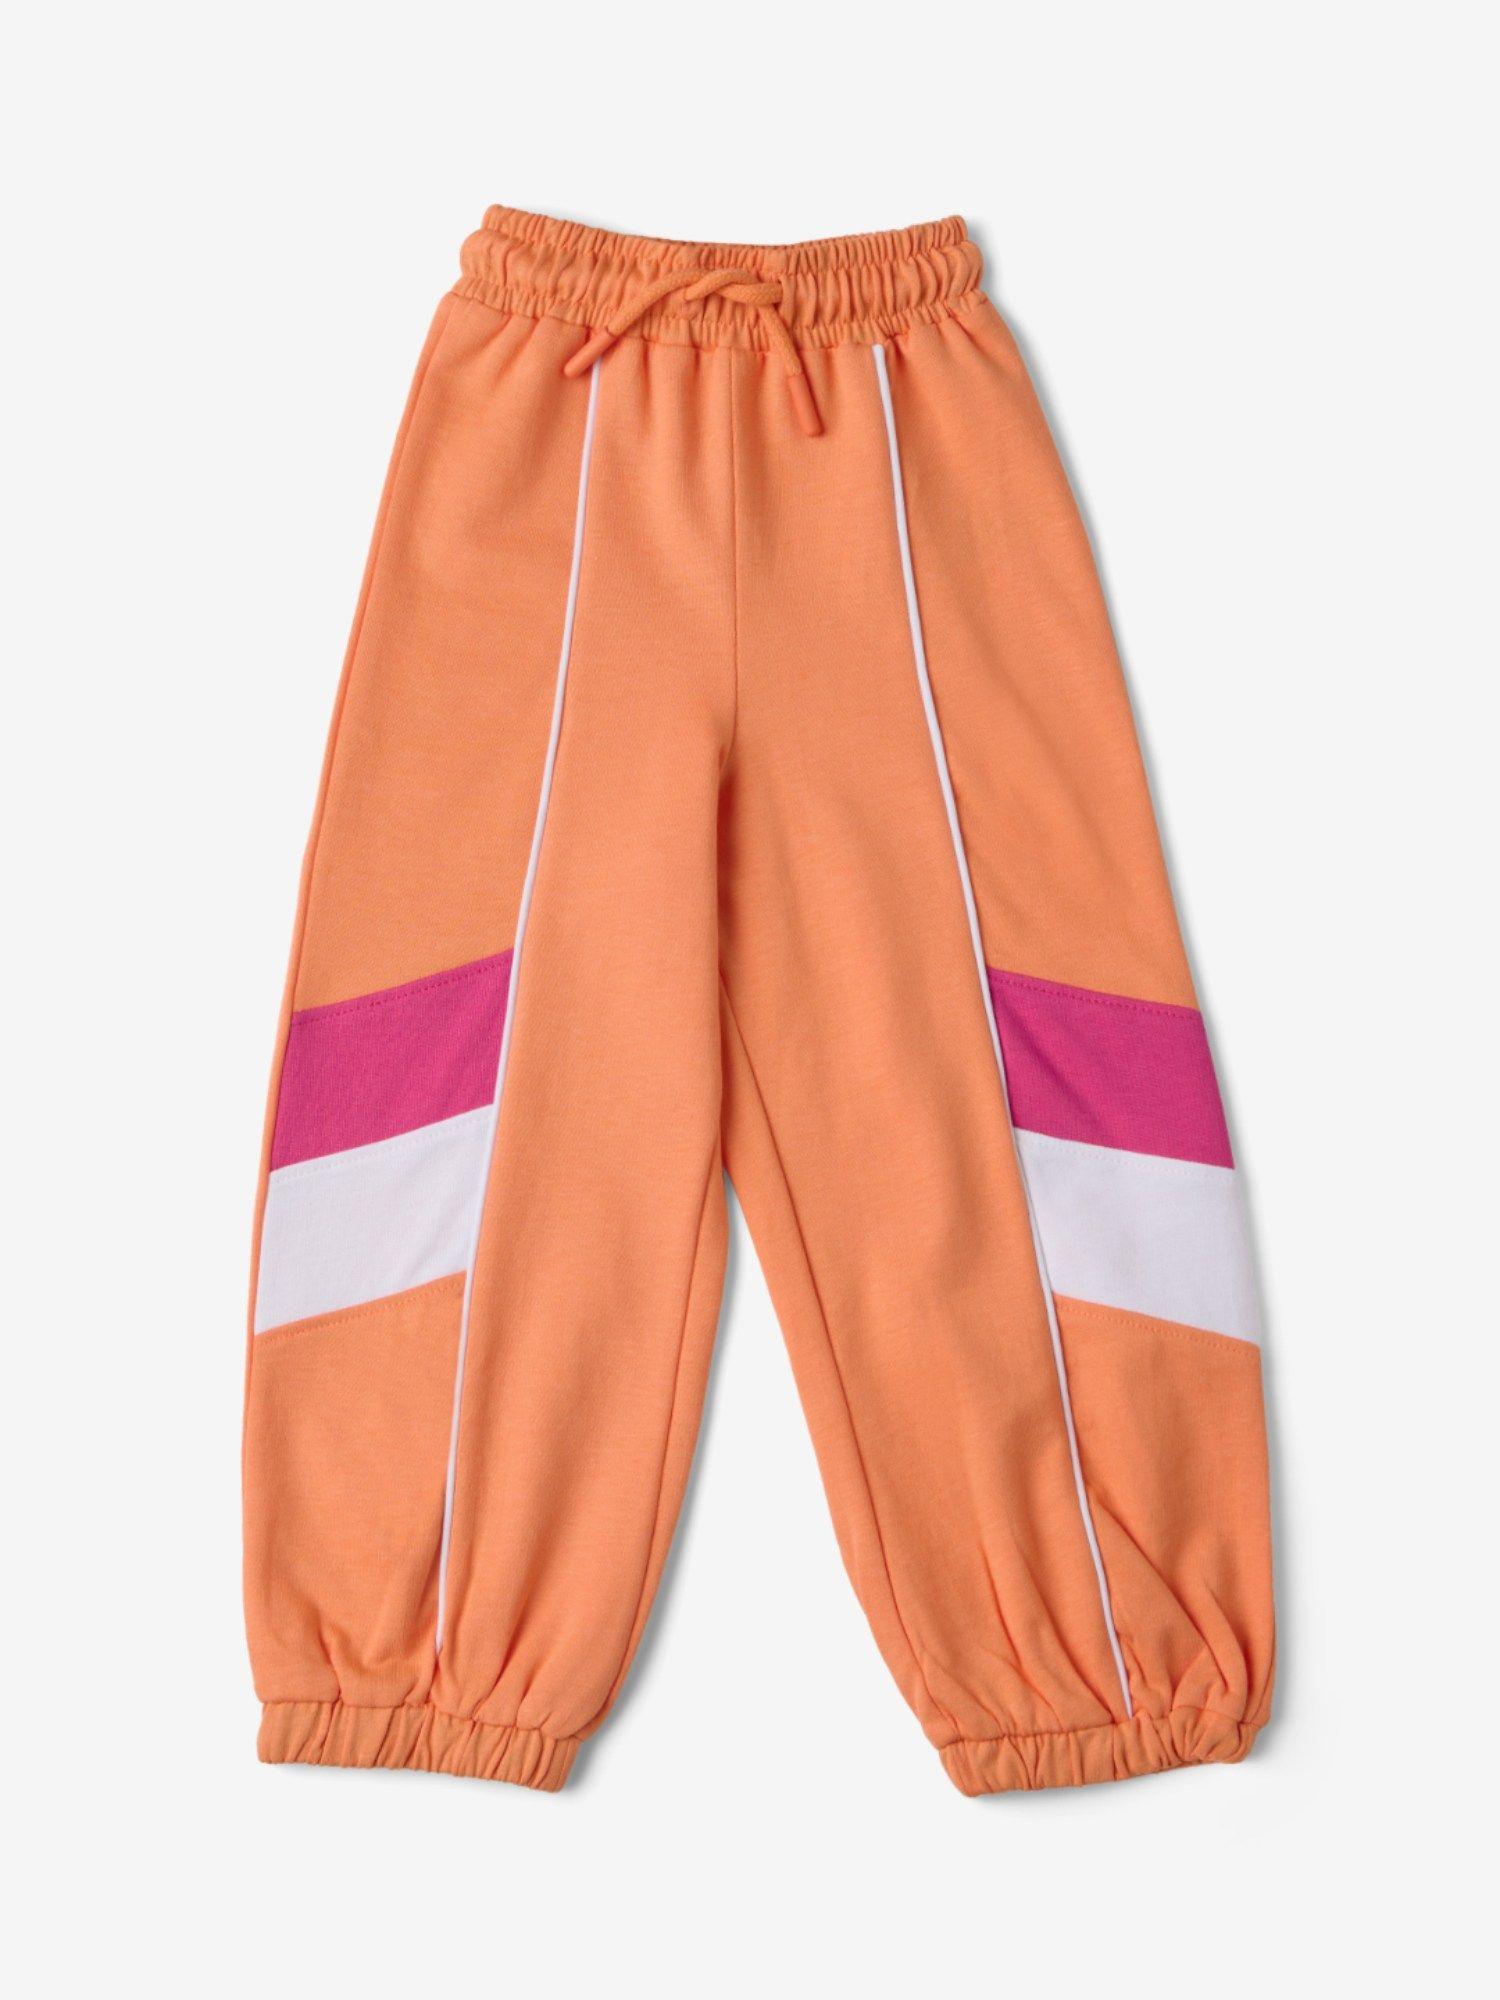 original solids: orange with stripes girls cotton jogger